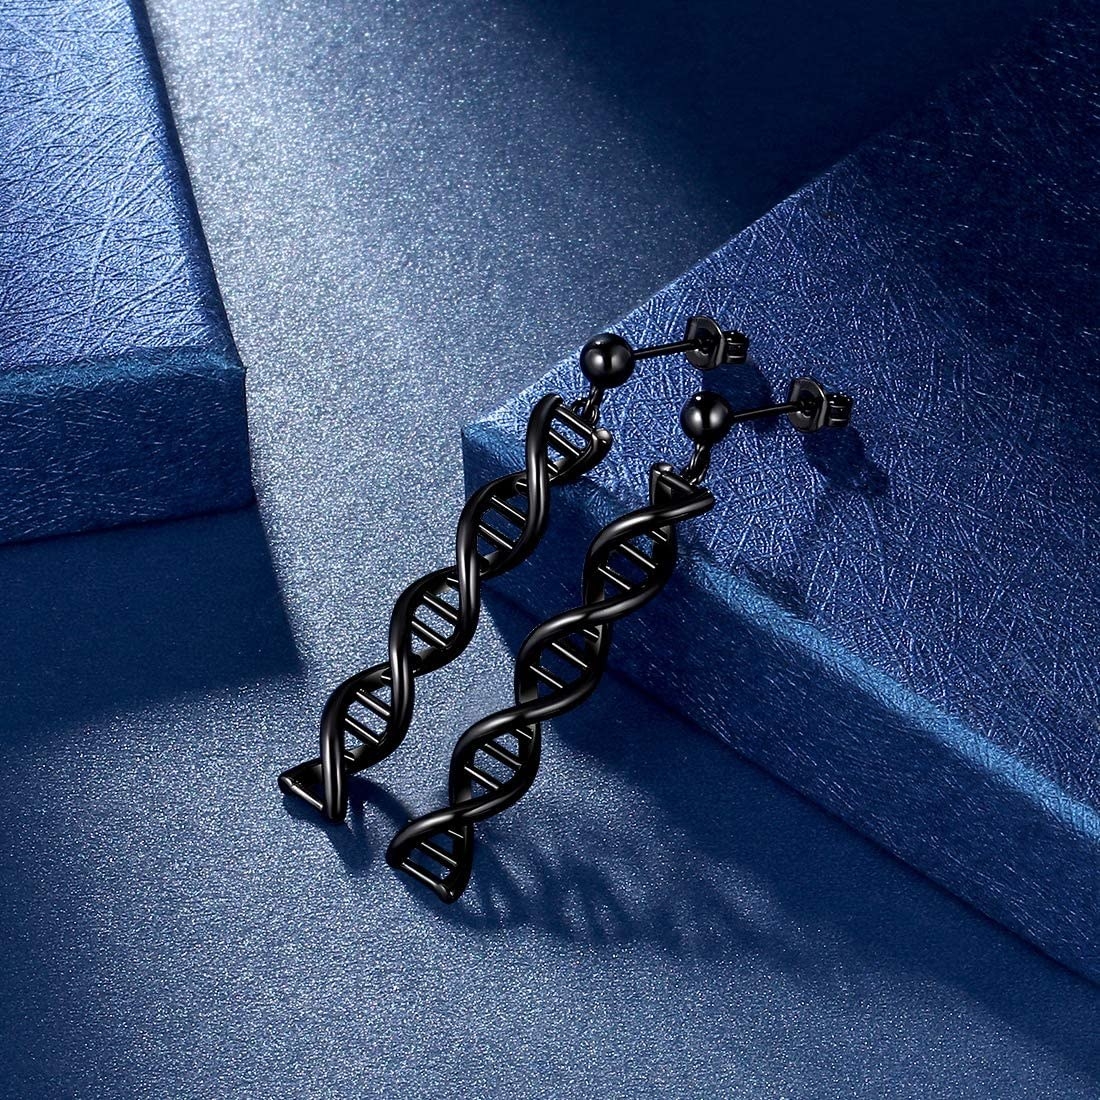 Two earrings shaped like DNA